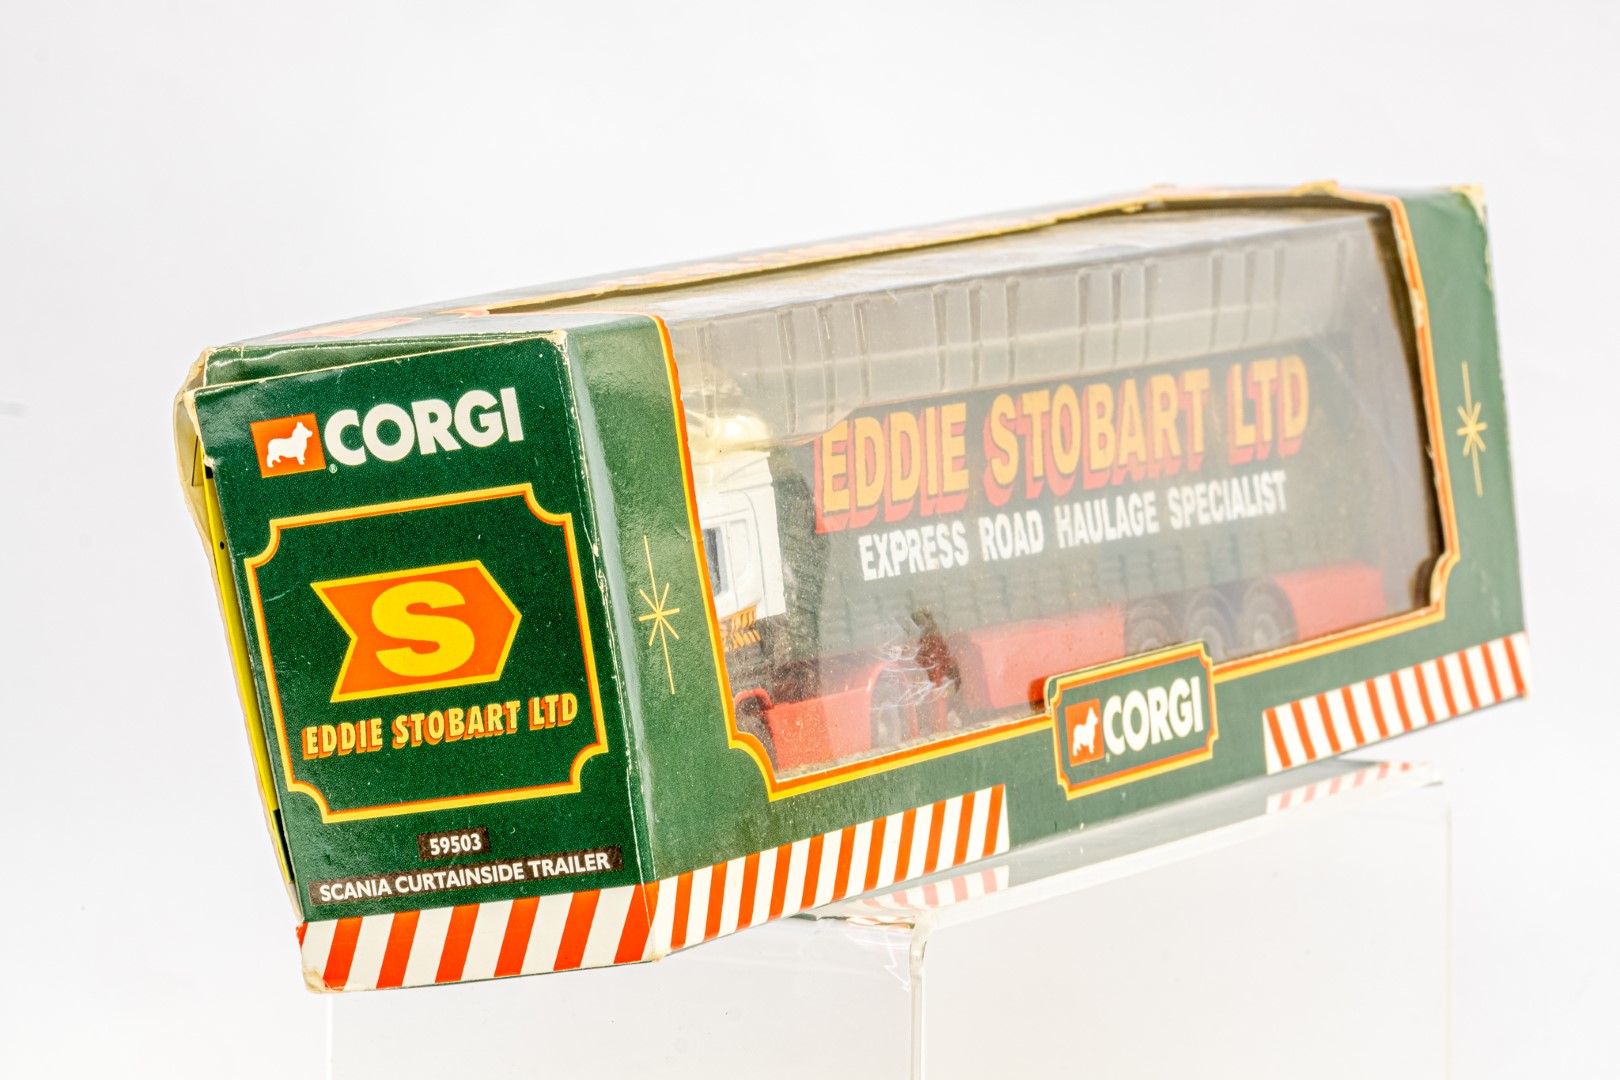 Corgi Scania Curtainsider Trailer - Eddie Stobart - Image 2 of 4